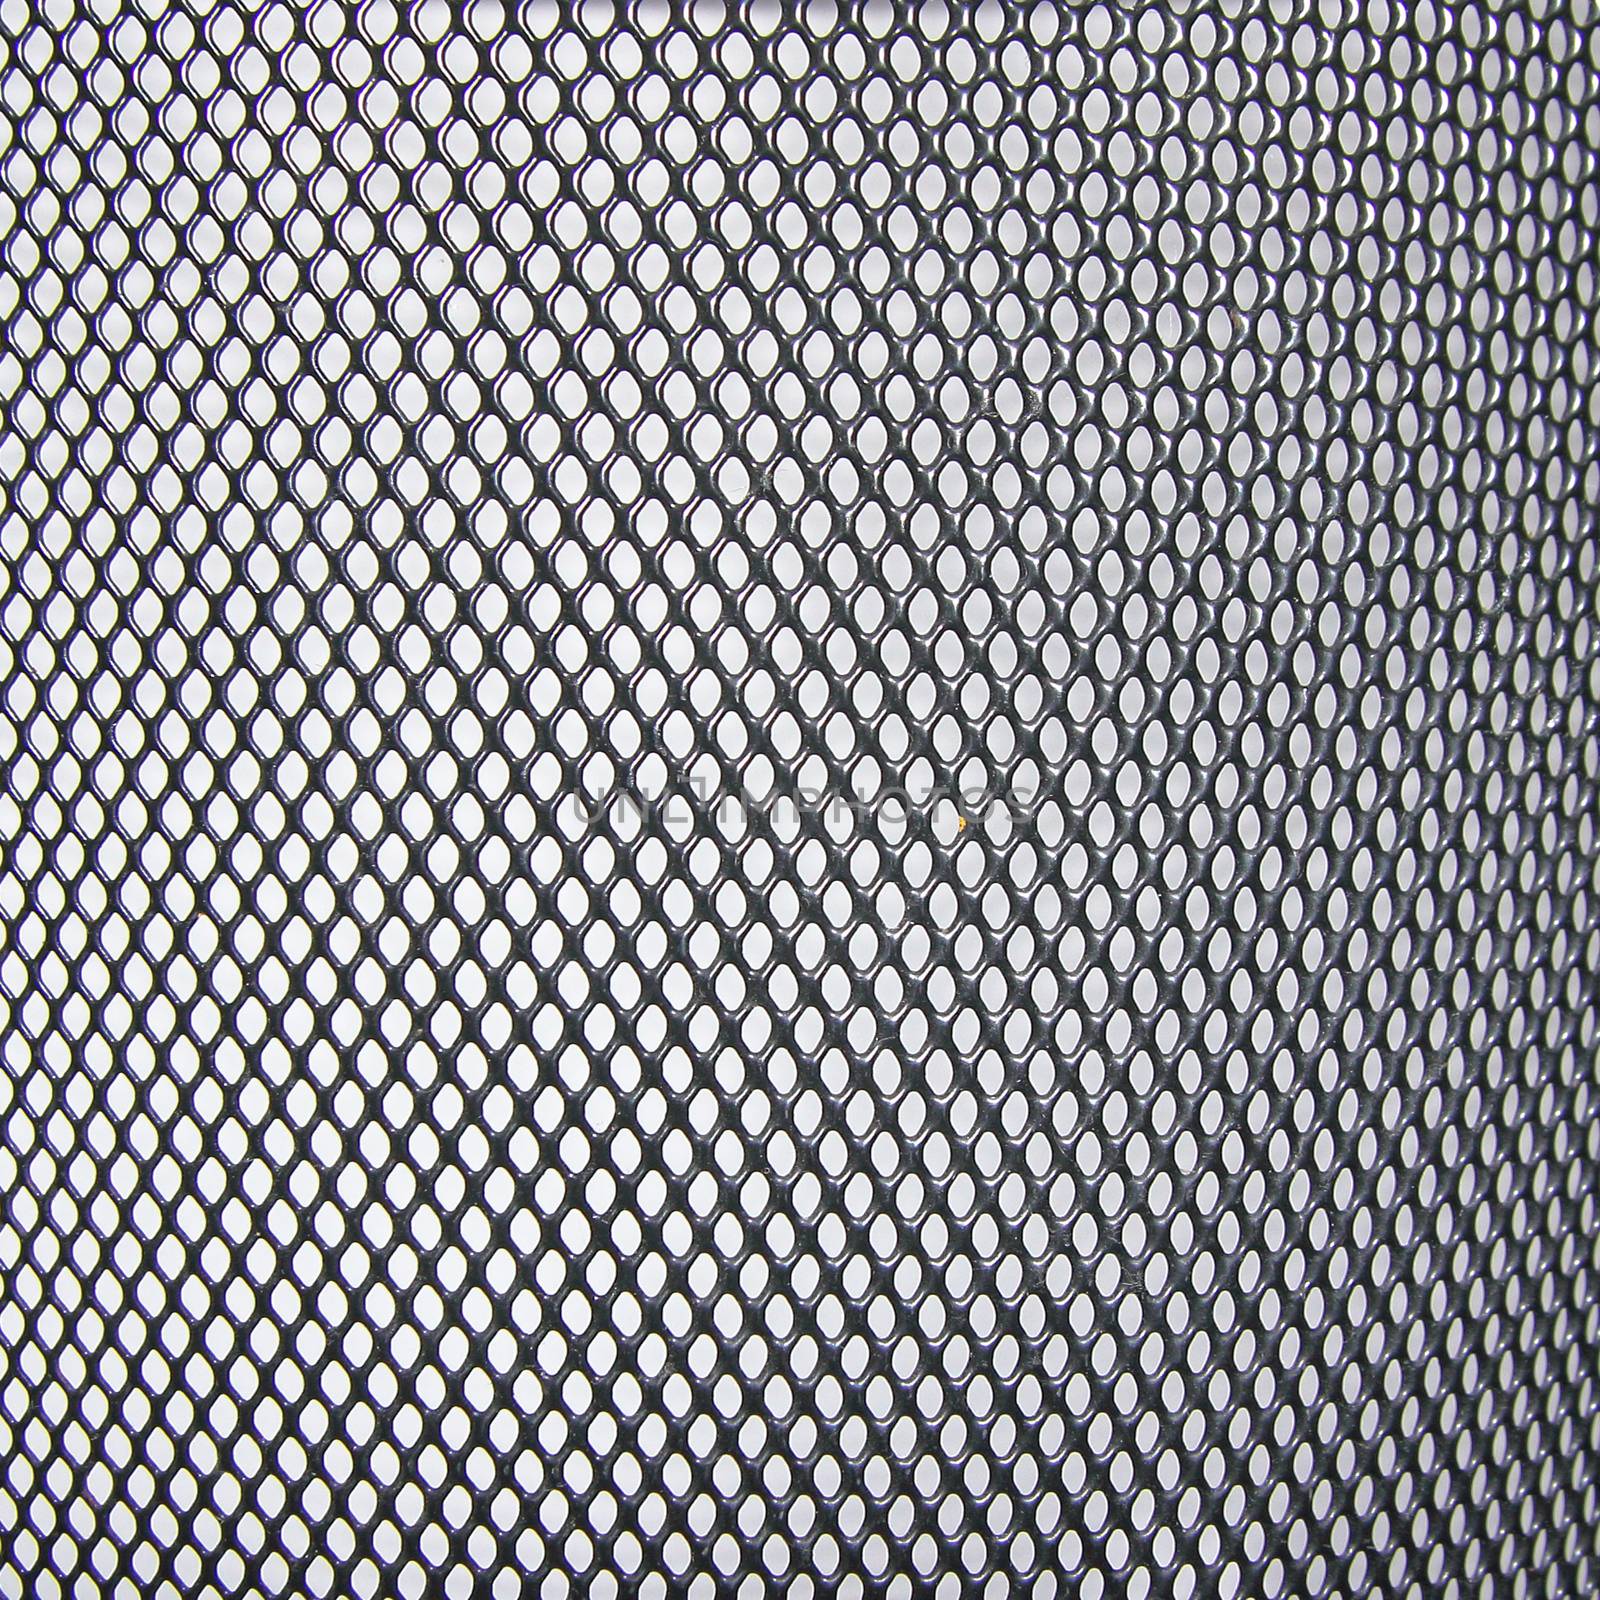 Steel grid with round holes by wyoosumran